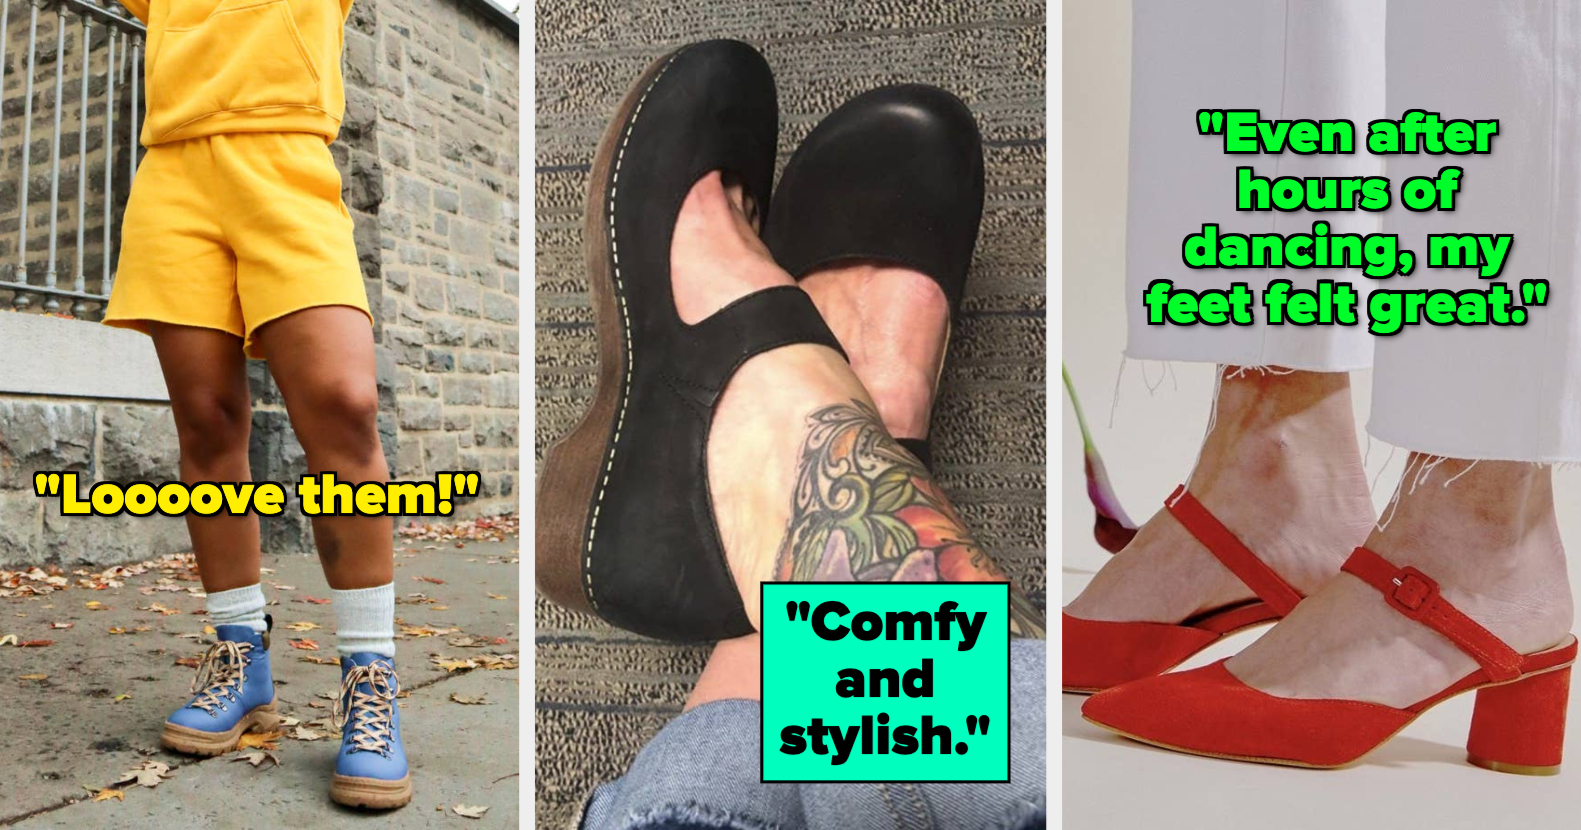 Mod Comfys Walking Sandals Womens Comfort Sandals Sports Sandals